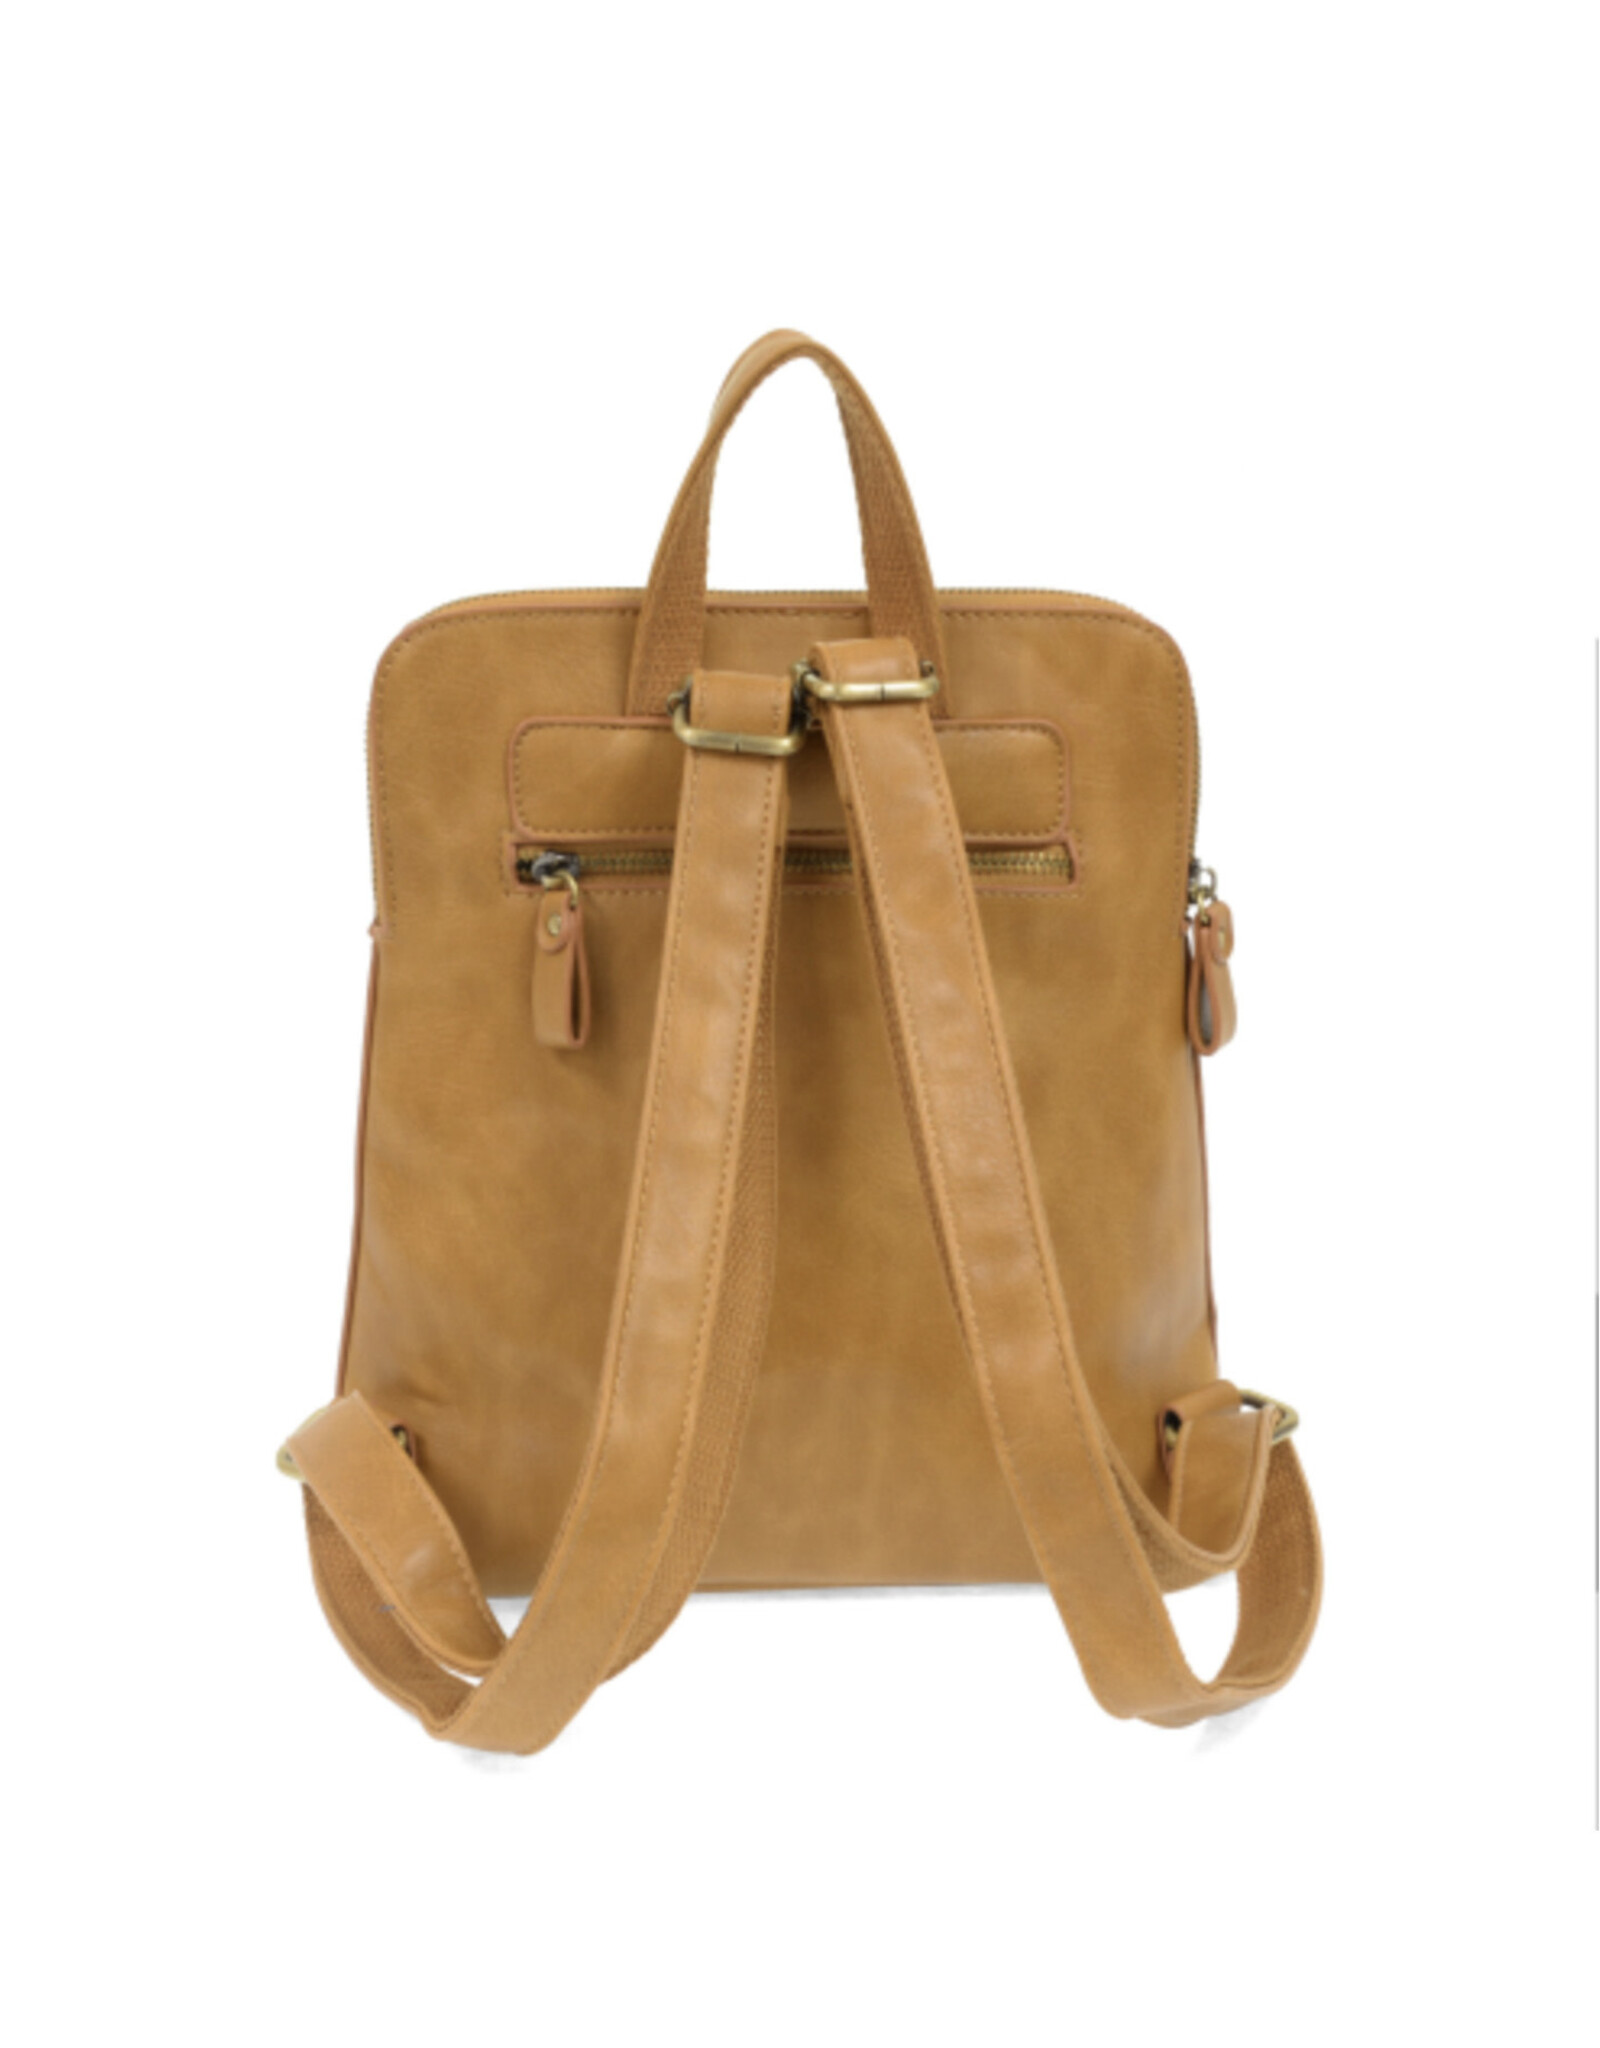 Julia Mini Backpack : Almond Brown